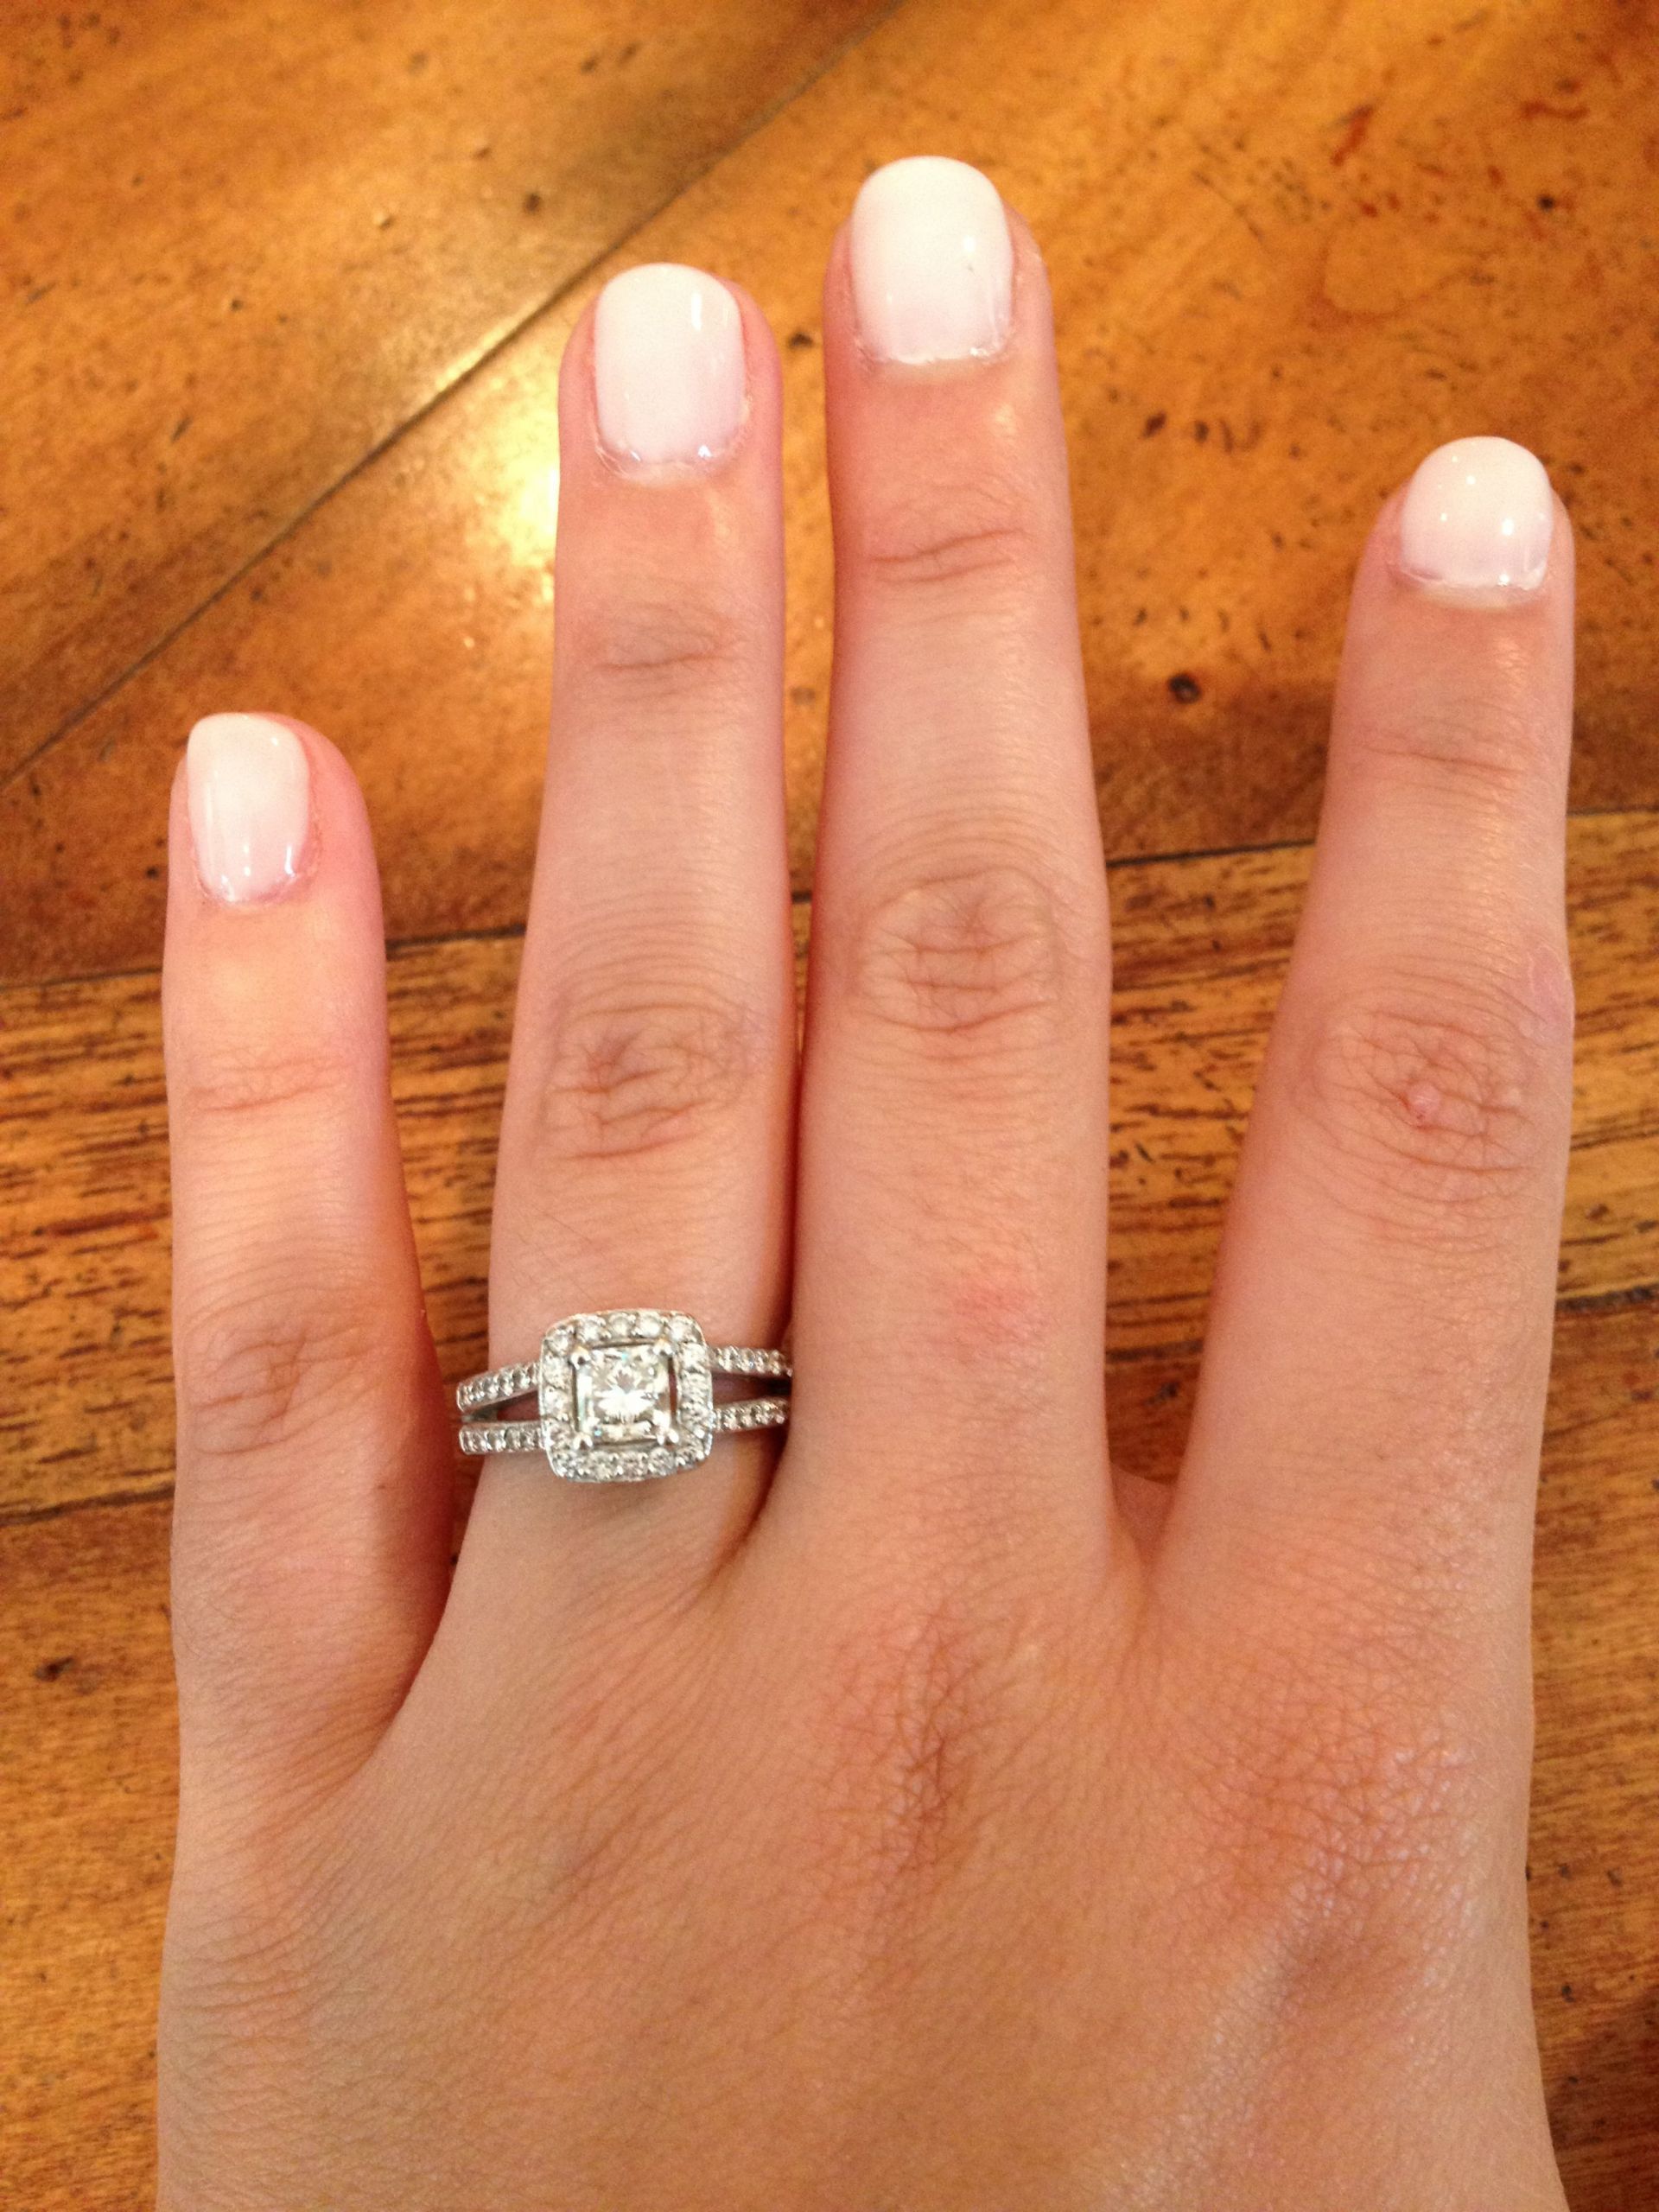 Wedding Day Nail Polish
 Perfect engagement ring and wedding day nail polish color